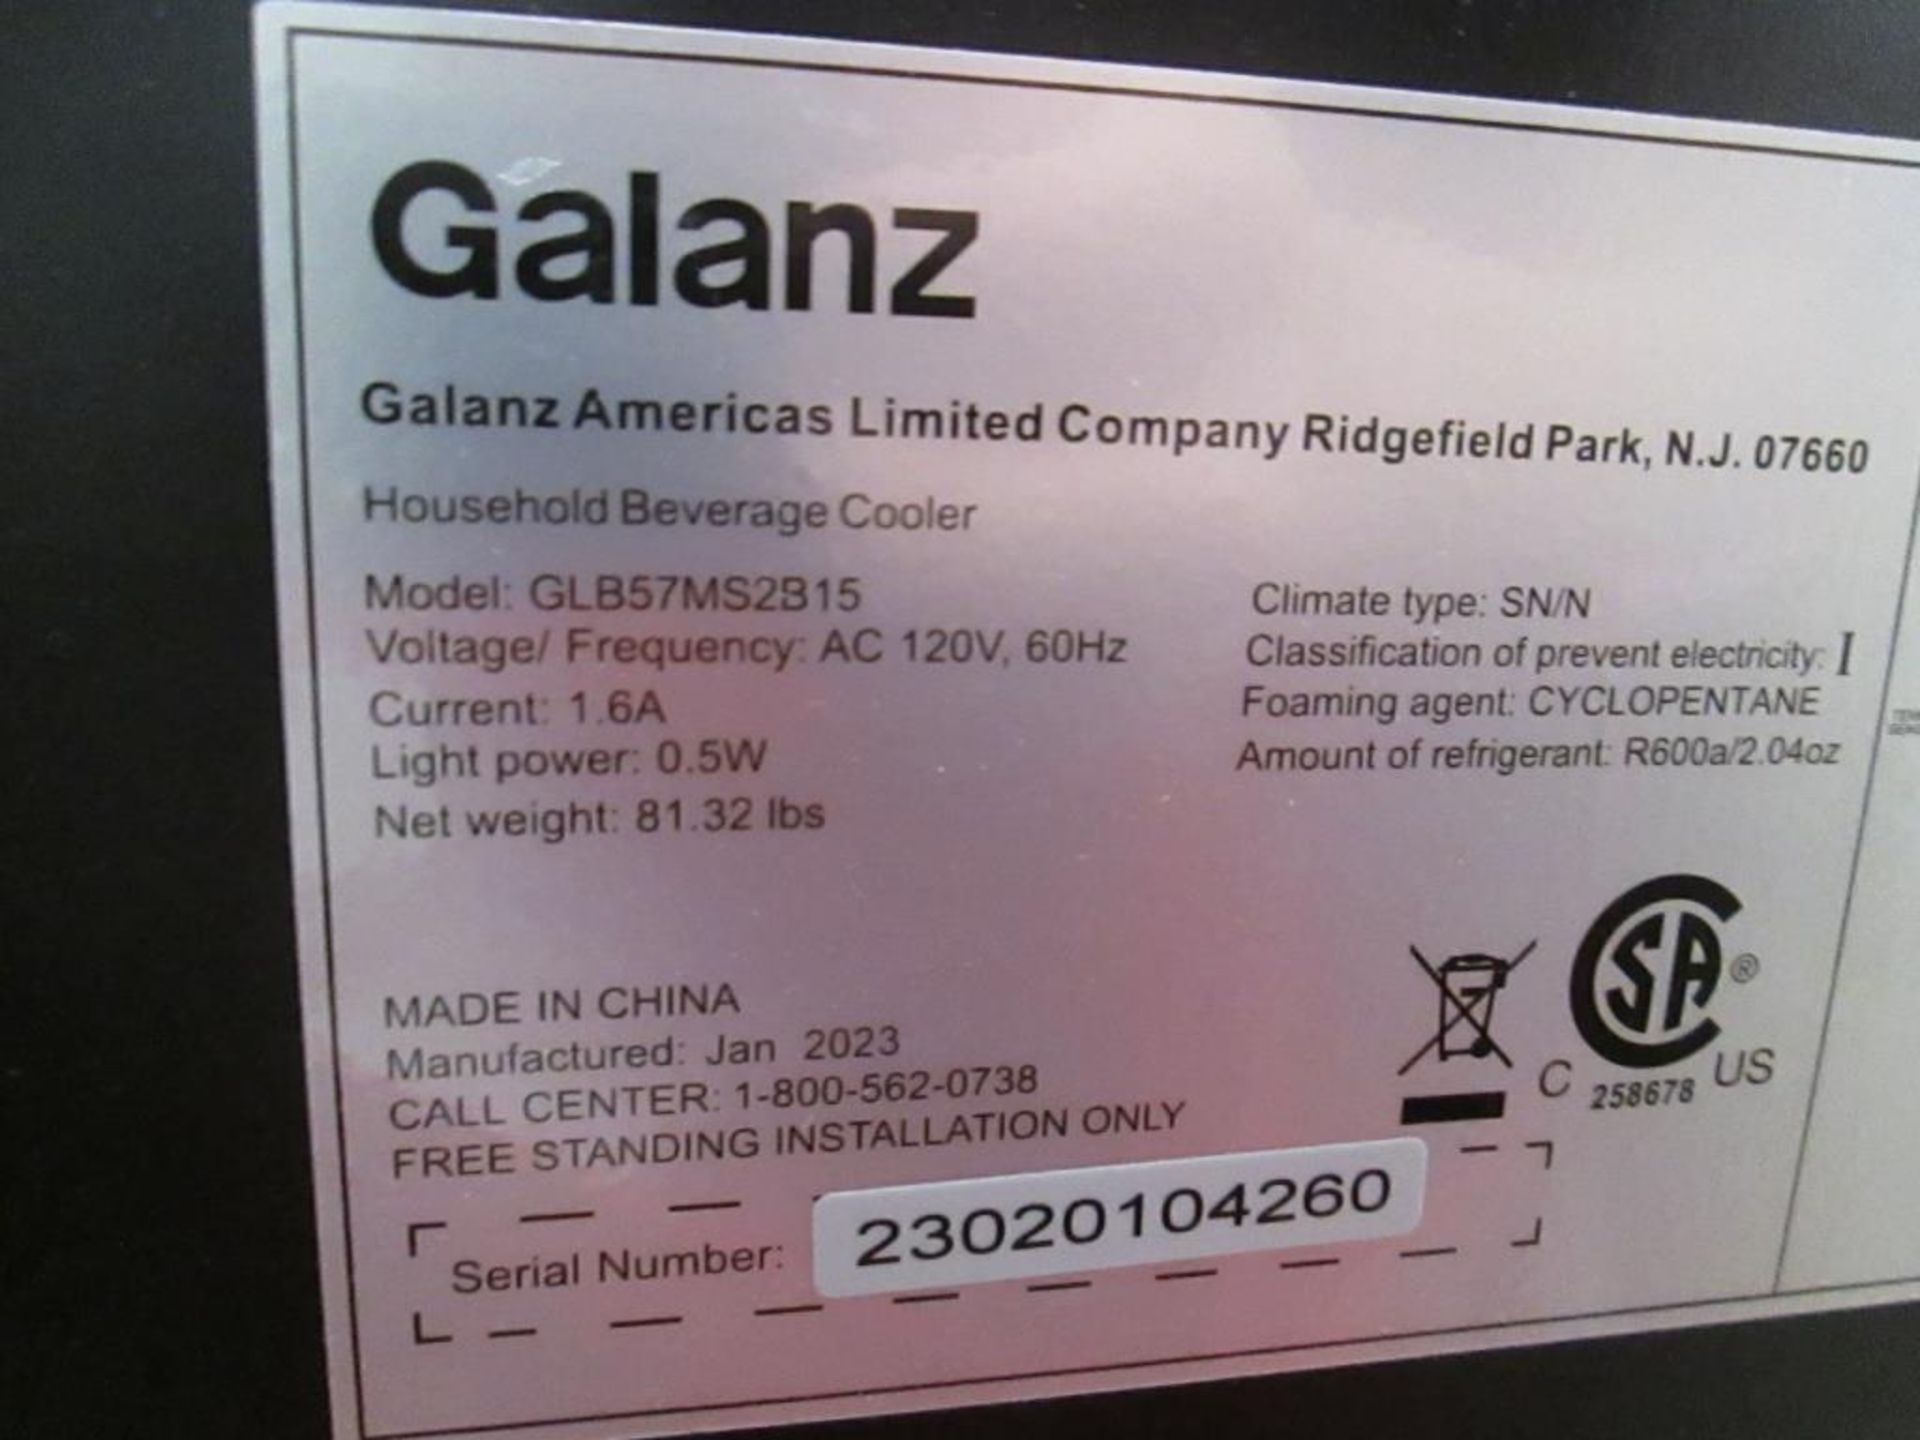 Galanz Beverage Cooler - Image 2 of 4